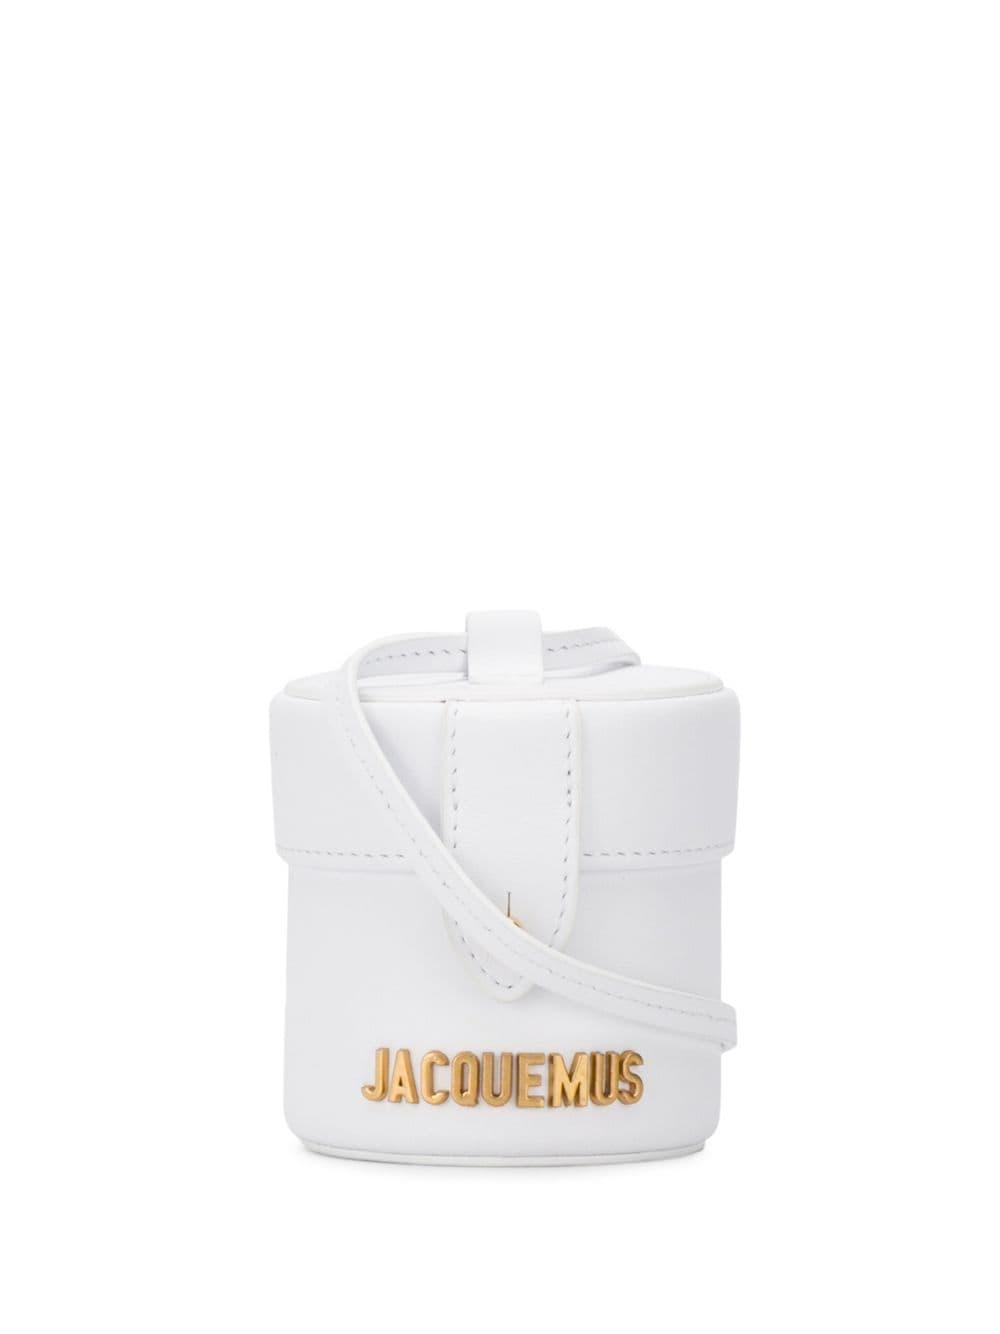 Jacquemus Le Vanity Round Leather Bag in White | Lyst Australia